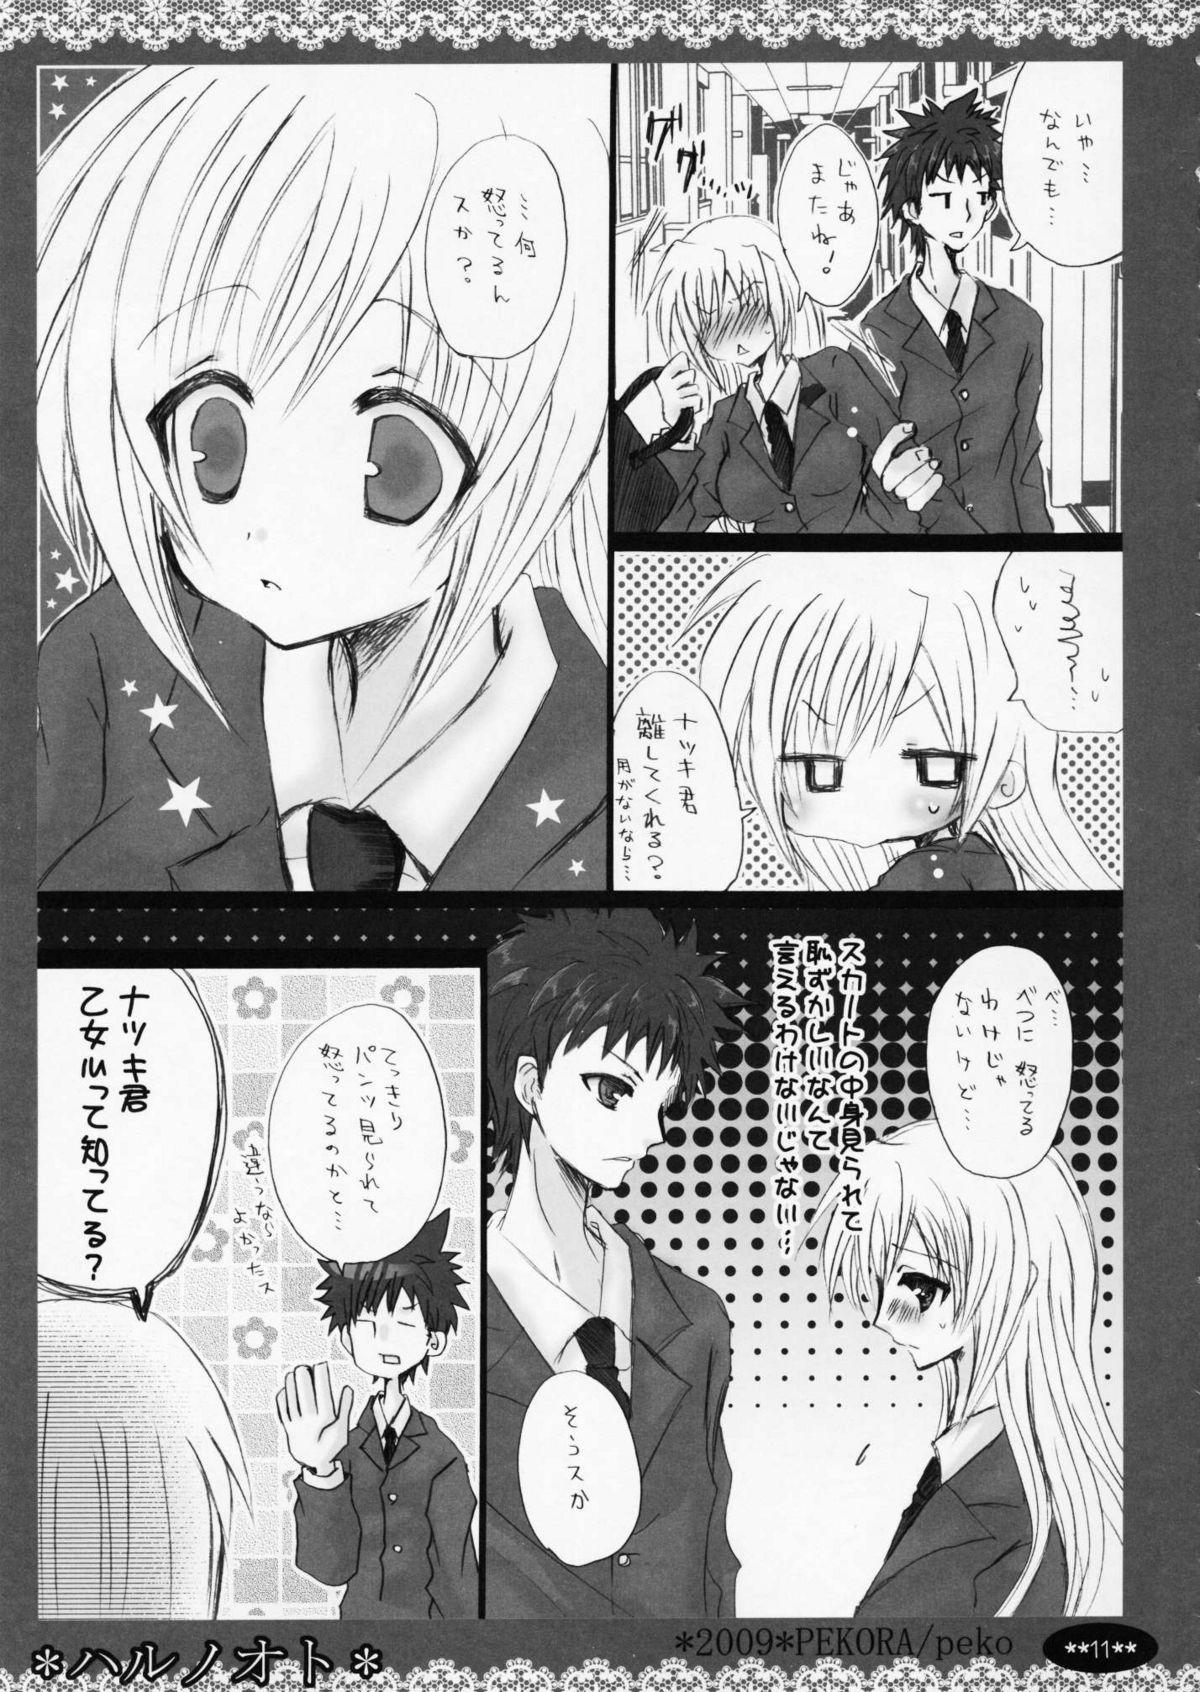 Spy Haru no Oto - Minami ke Porno 18 - Page 11